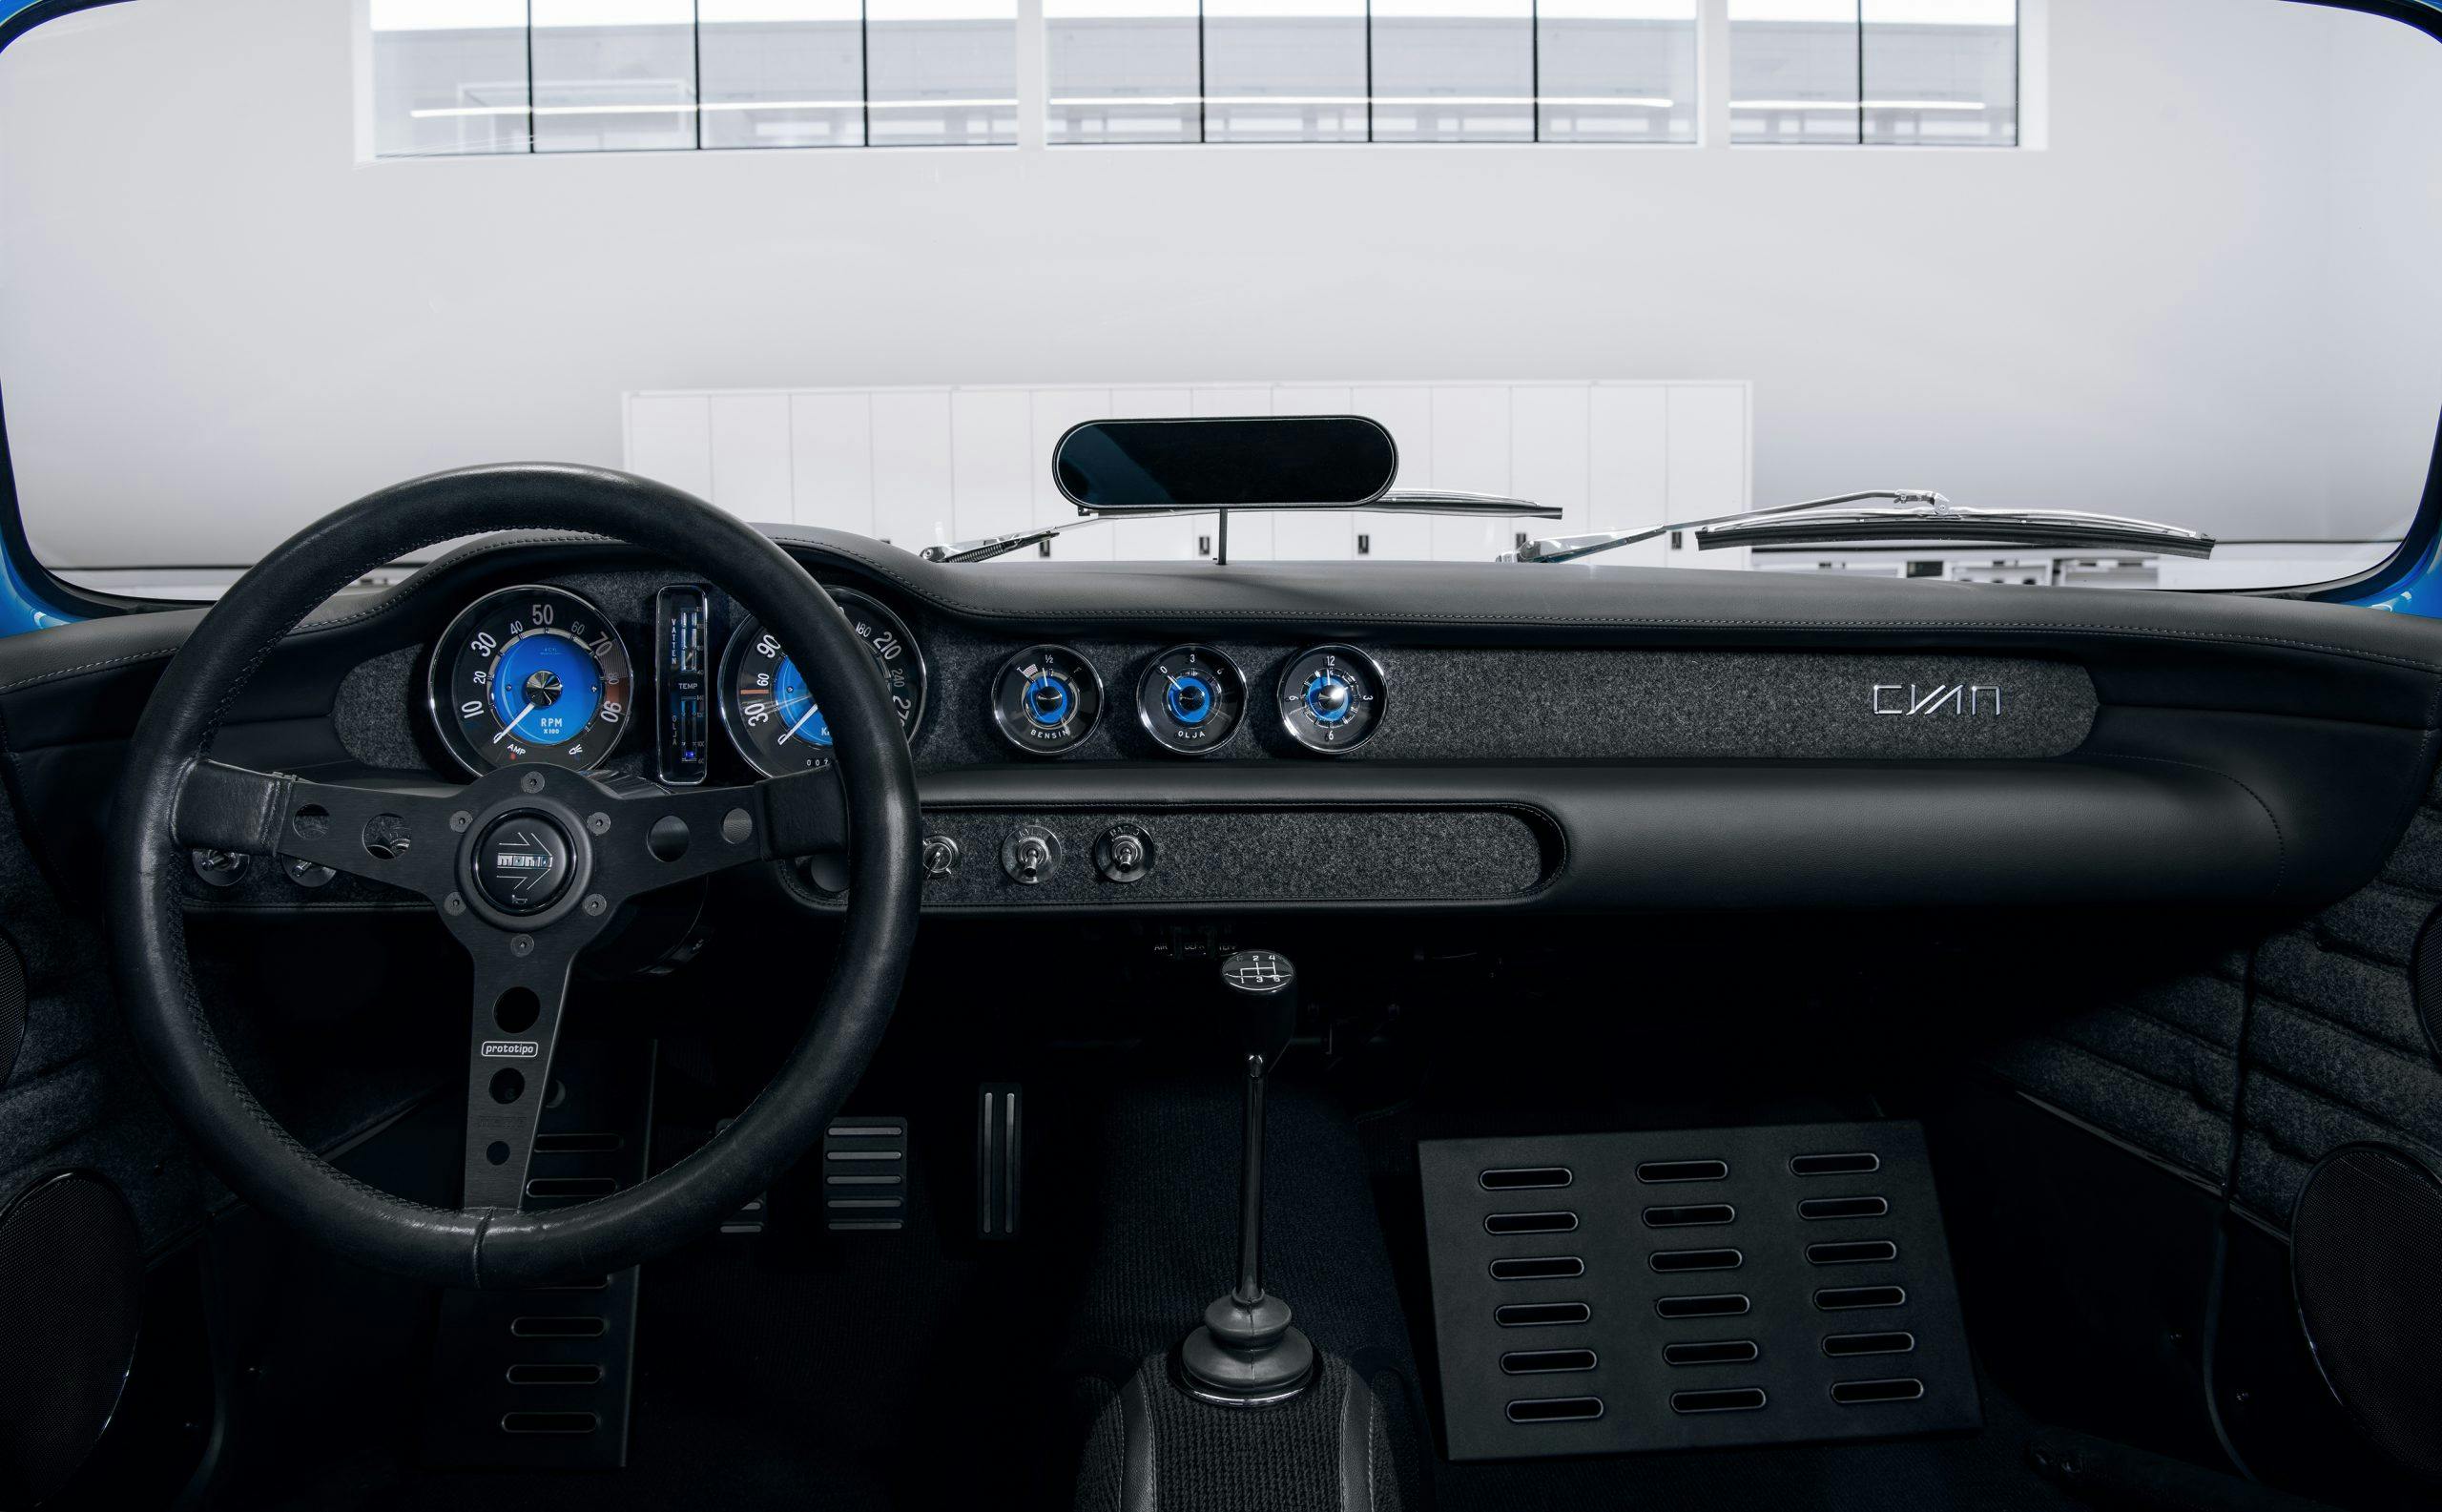 Cyan Racing Volvo P1800 interior